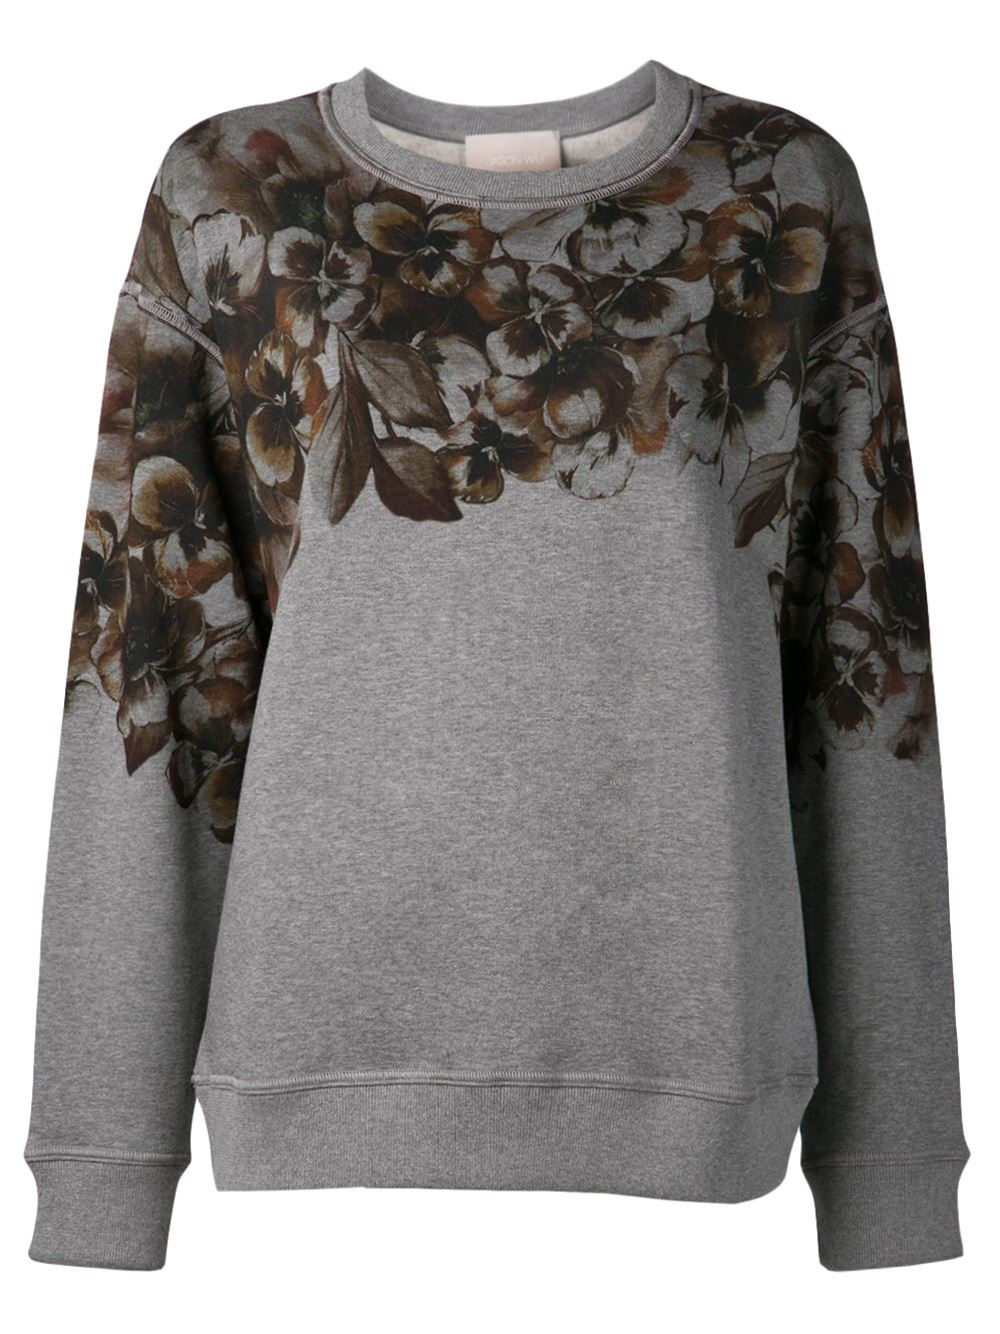 Lyst - Jason Wu Floral Print Sweatshirt in Gray